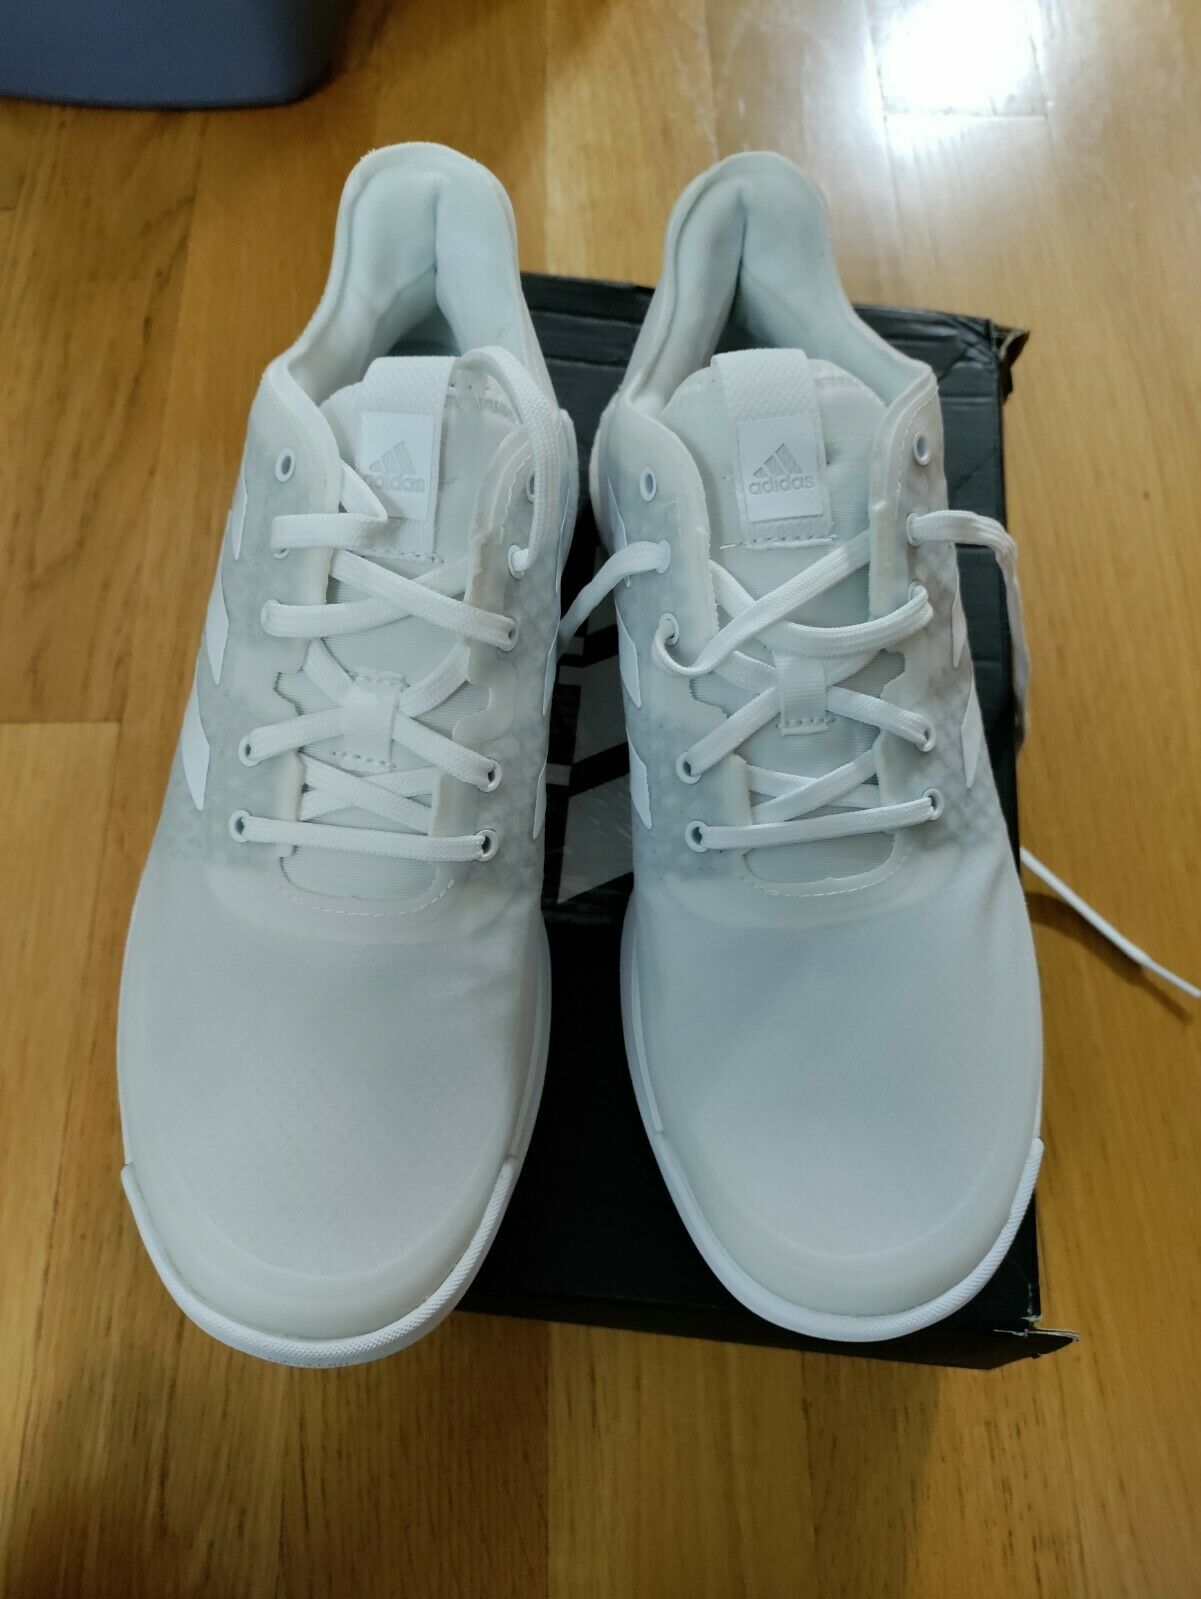 Adidas Women's Crazy flight Bounce 3 Volleyball Shoes size 7.5 dmg box